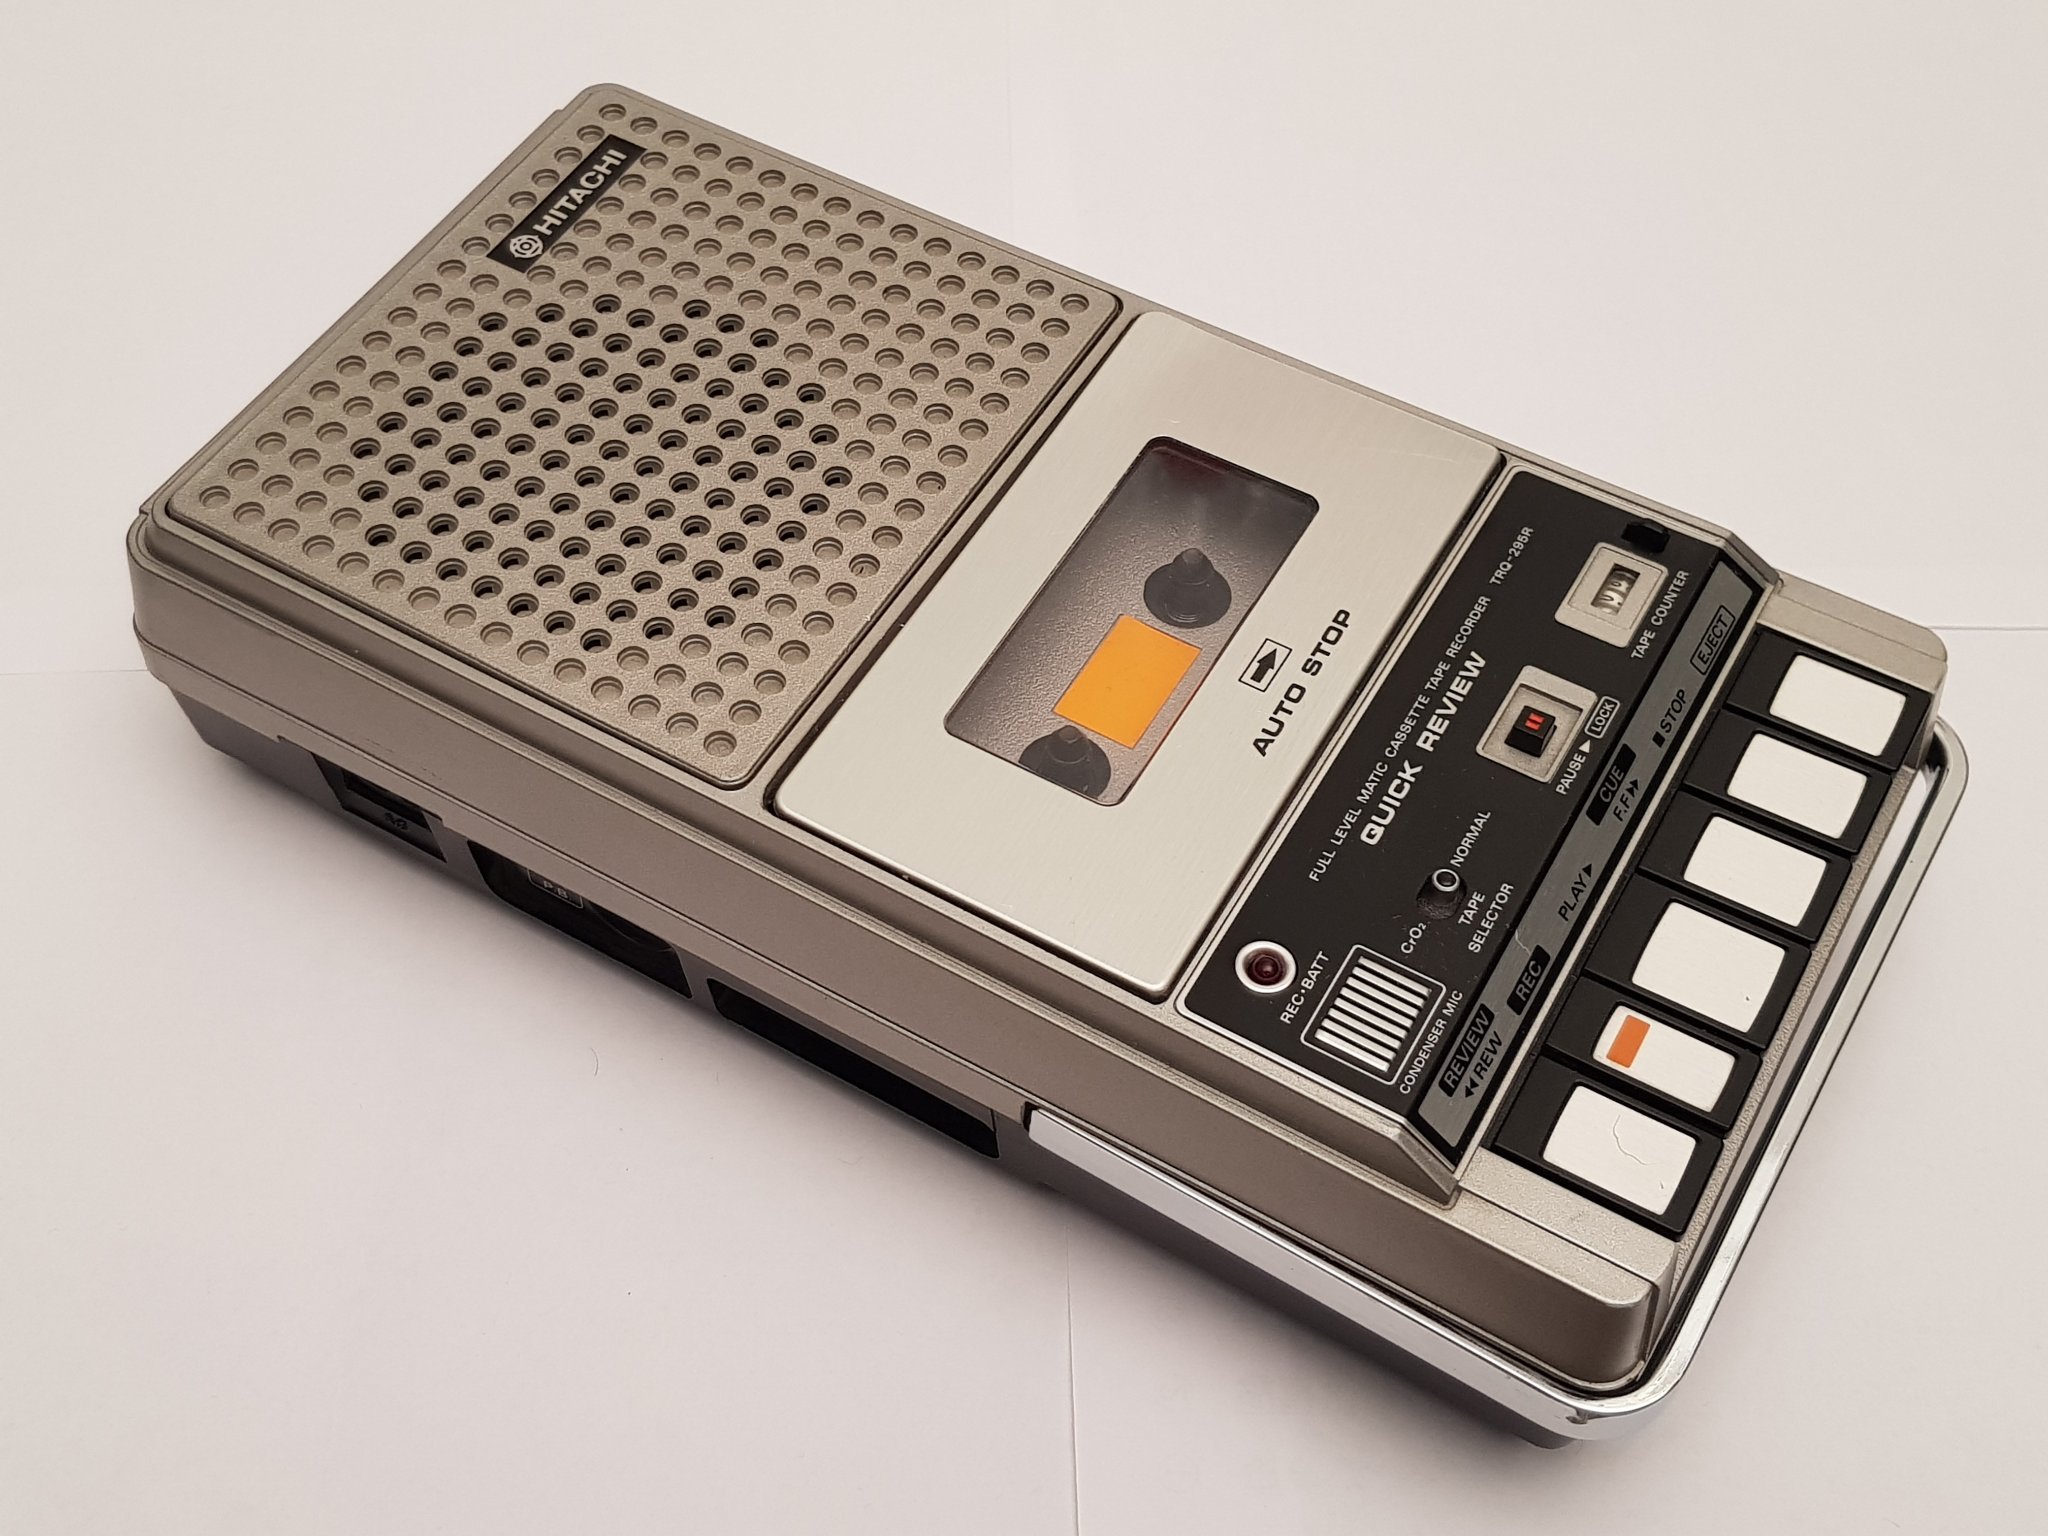 Hitachi TRQ-295R cassette tape recorder - this design is so sexy...